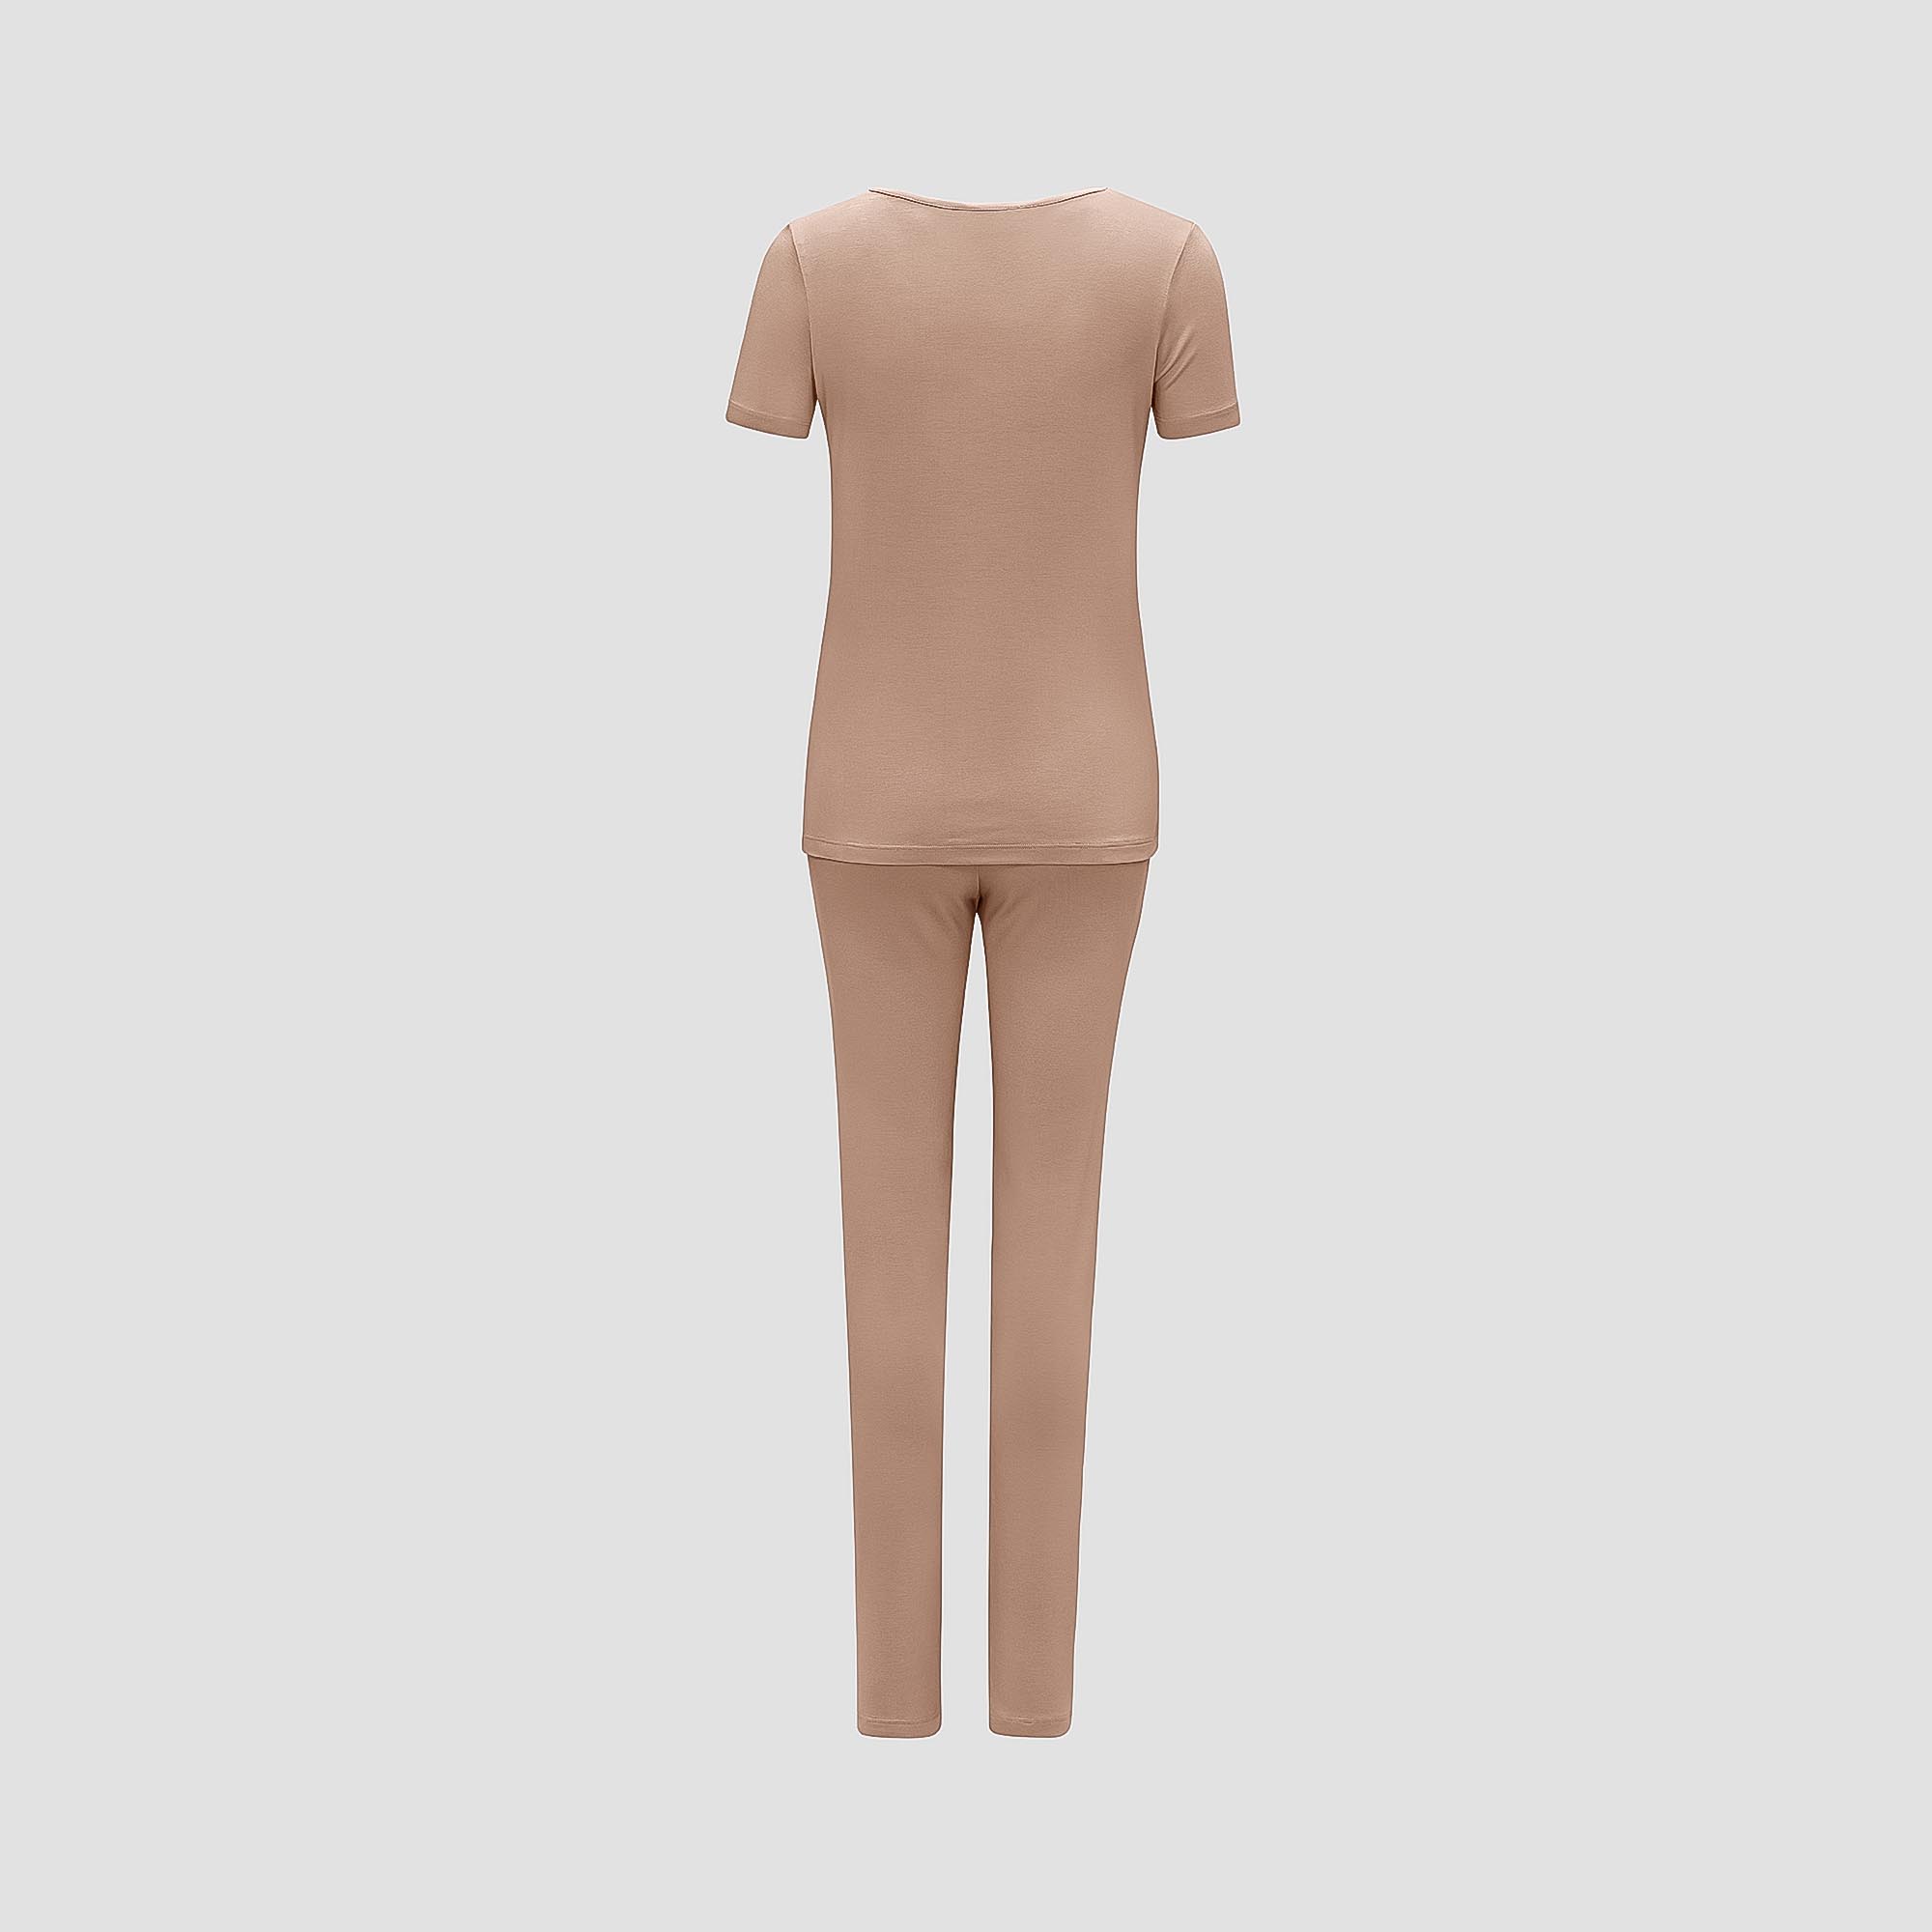 Пижама Togas Ингелла розово-бежевая женская XXL(52) 2 предмета, цвет розовый, размер XXL(52) - фото 3